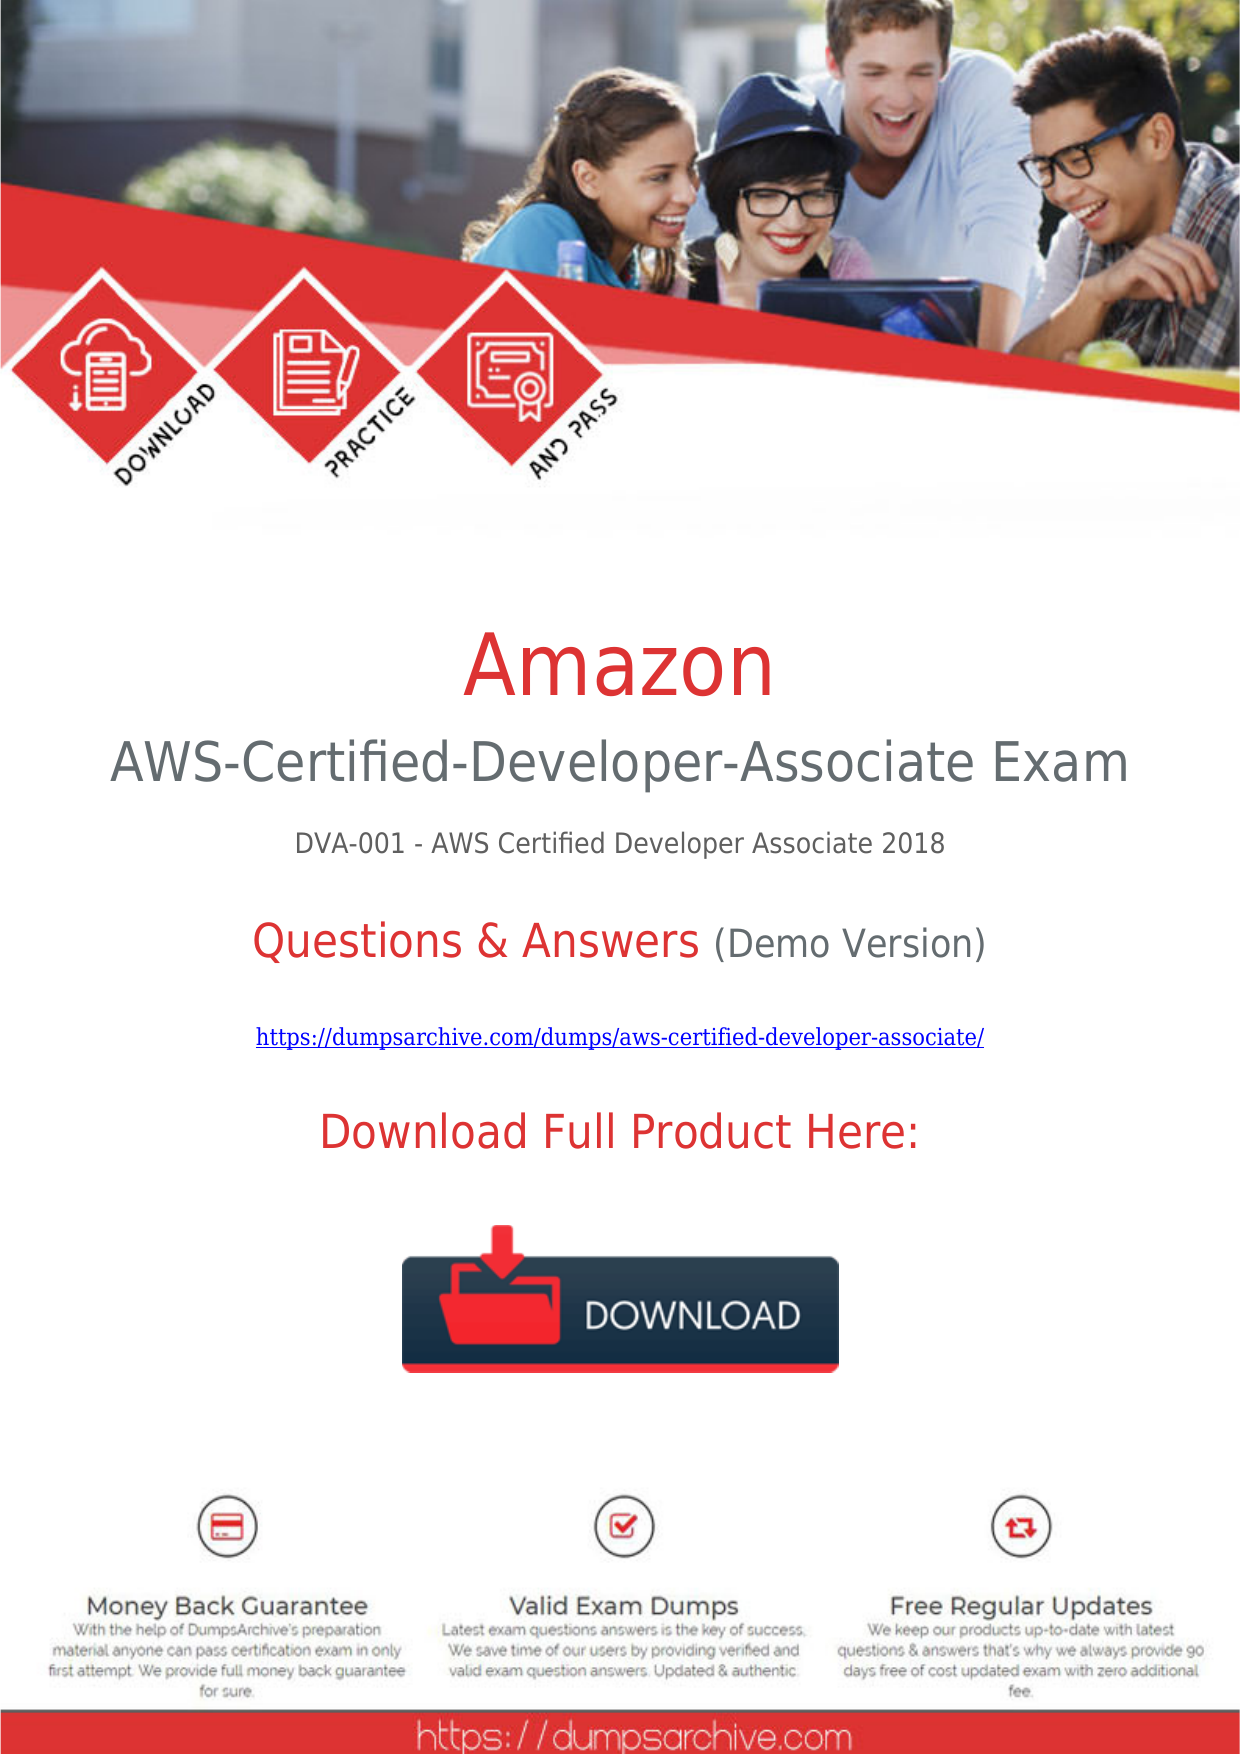 AWS-Certified-Developer-Associate Practice Test Fee